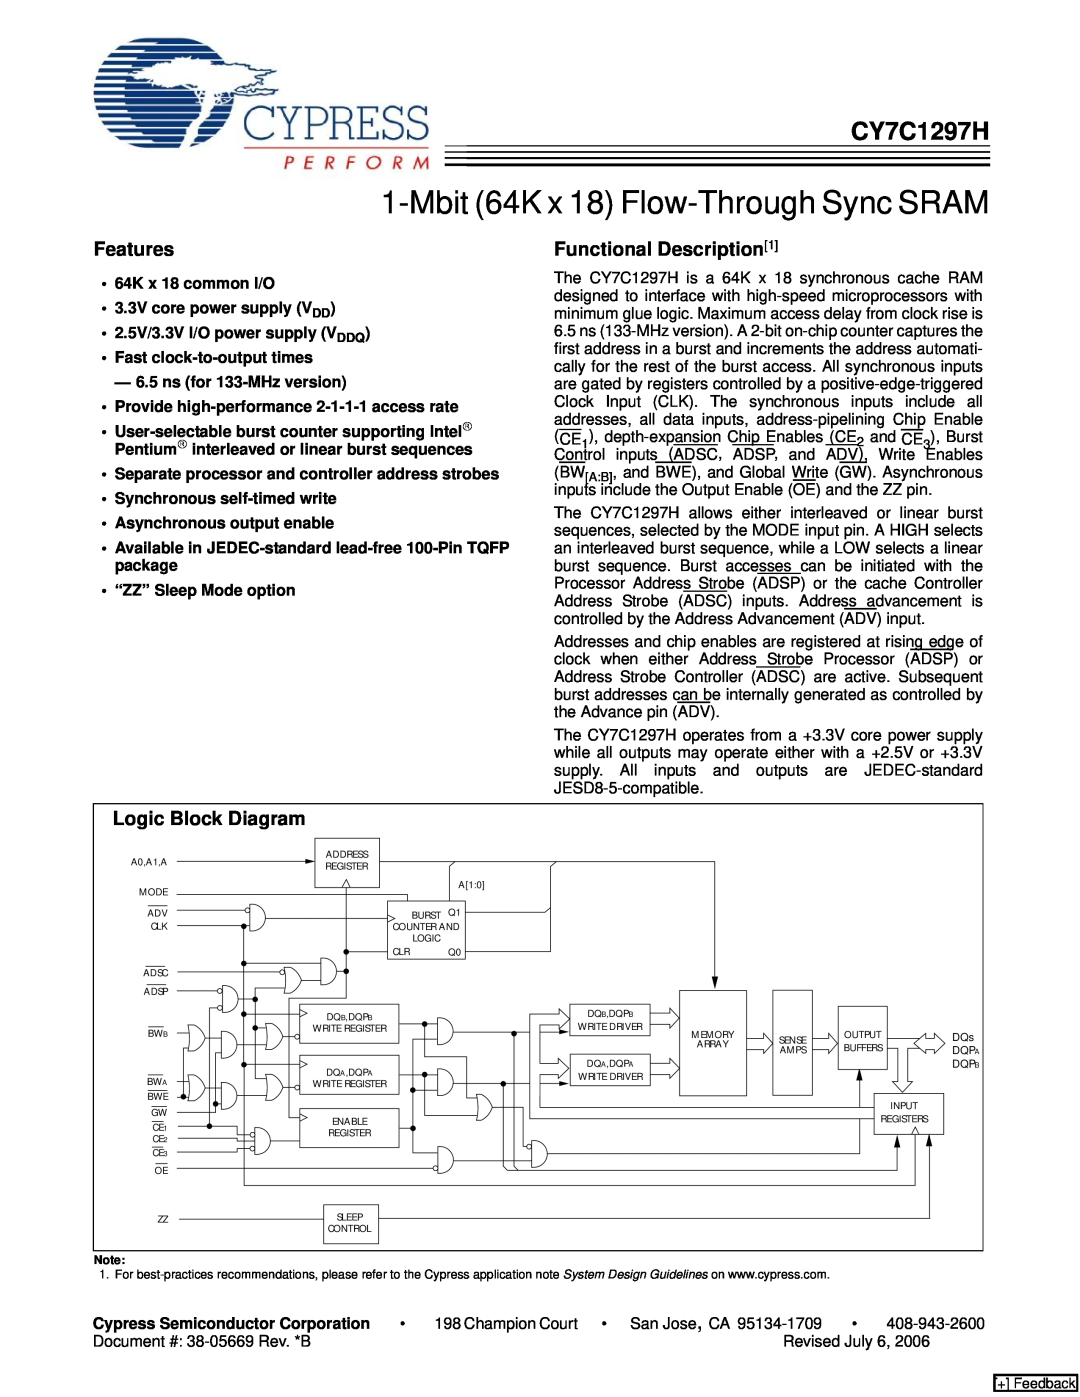 Cypress CY7C1297H manual Features, Functional Description1, Logic Block Diagram, Mbit 64K x 18 Flow-Through Sync SRAM 